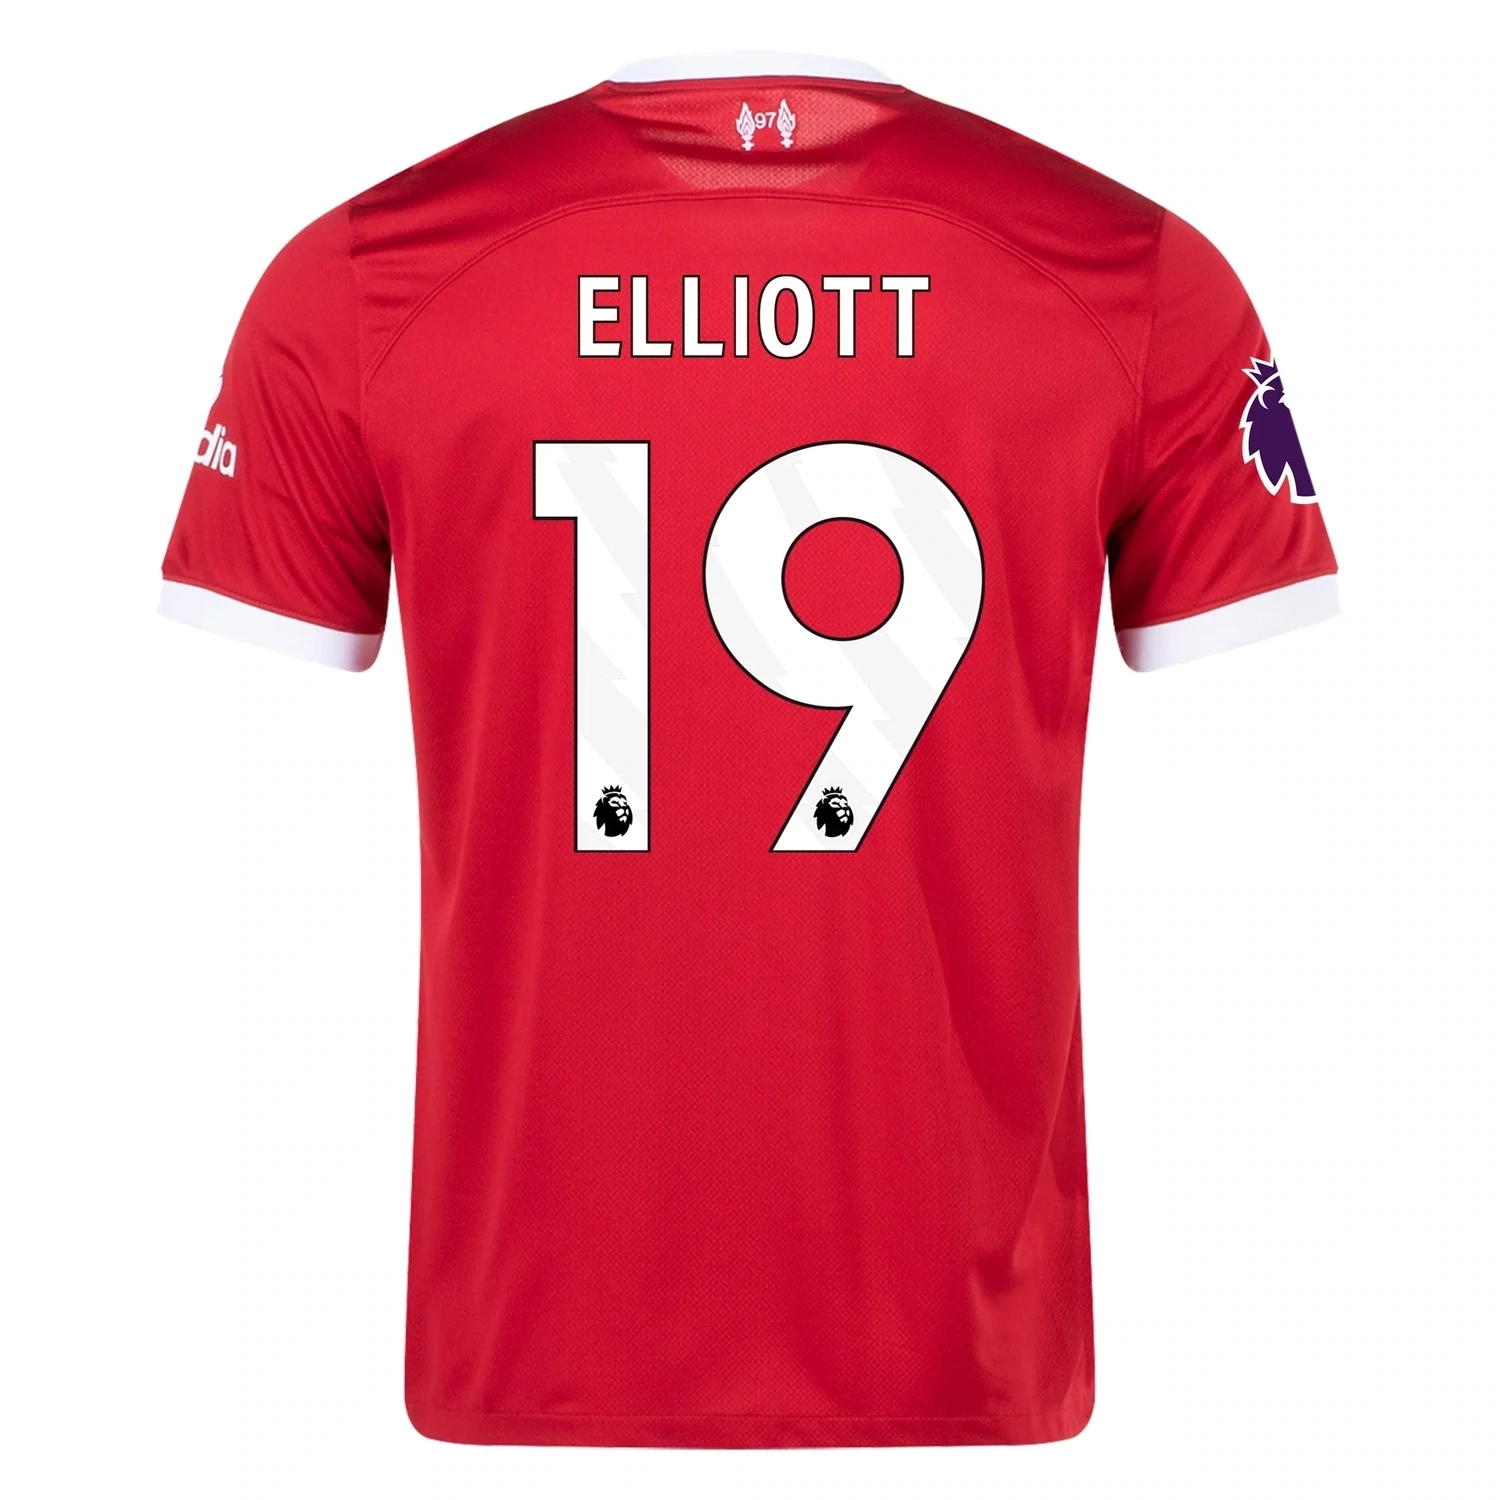 ELLIOTT Liverpool 23/24 Home Red Jersey for Men